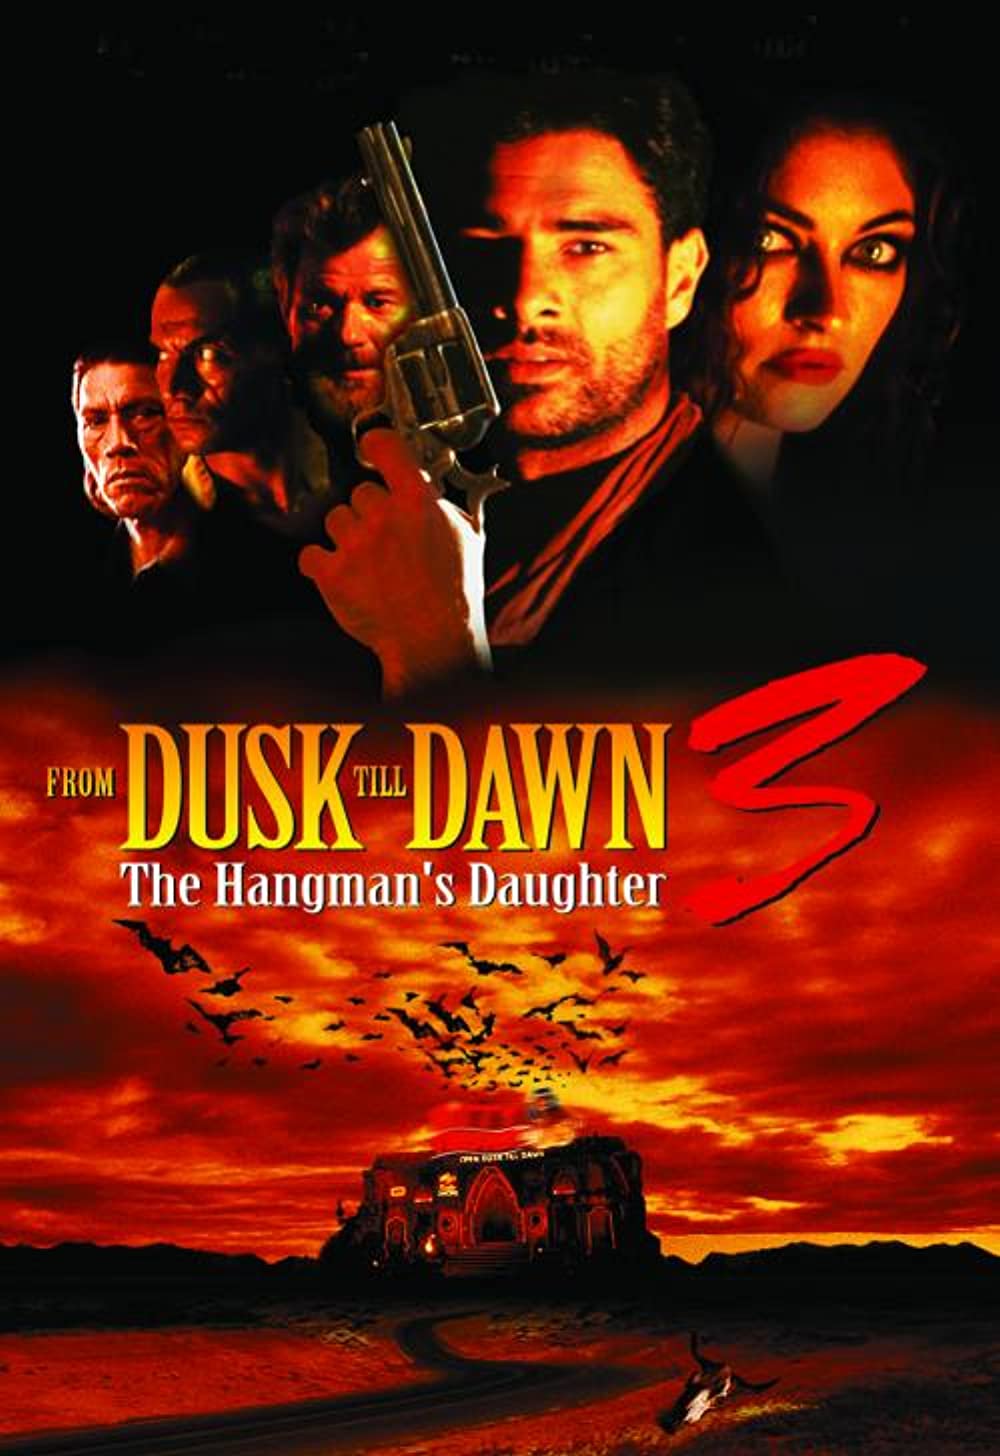 From Dusk till Dawn 3 The Hangman’s Daughter (1999)